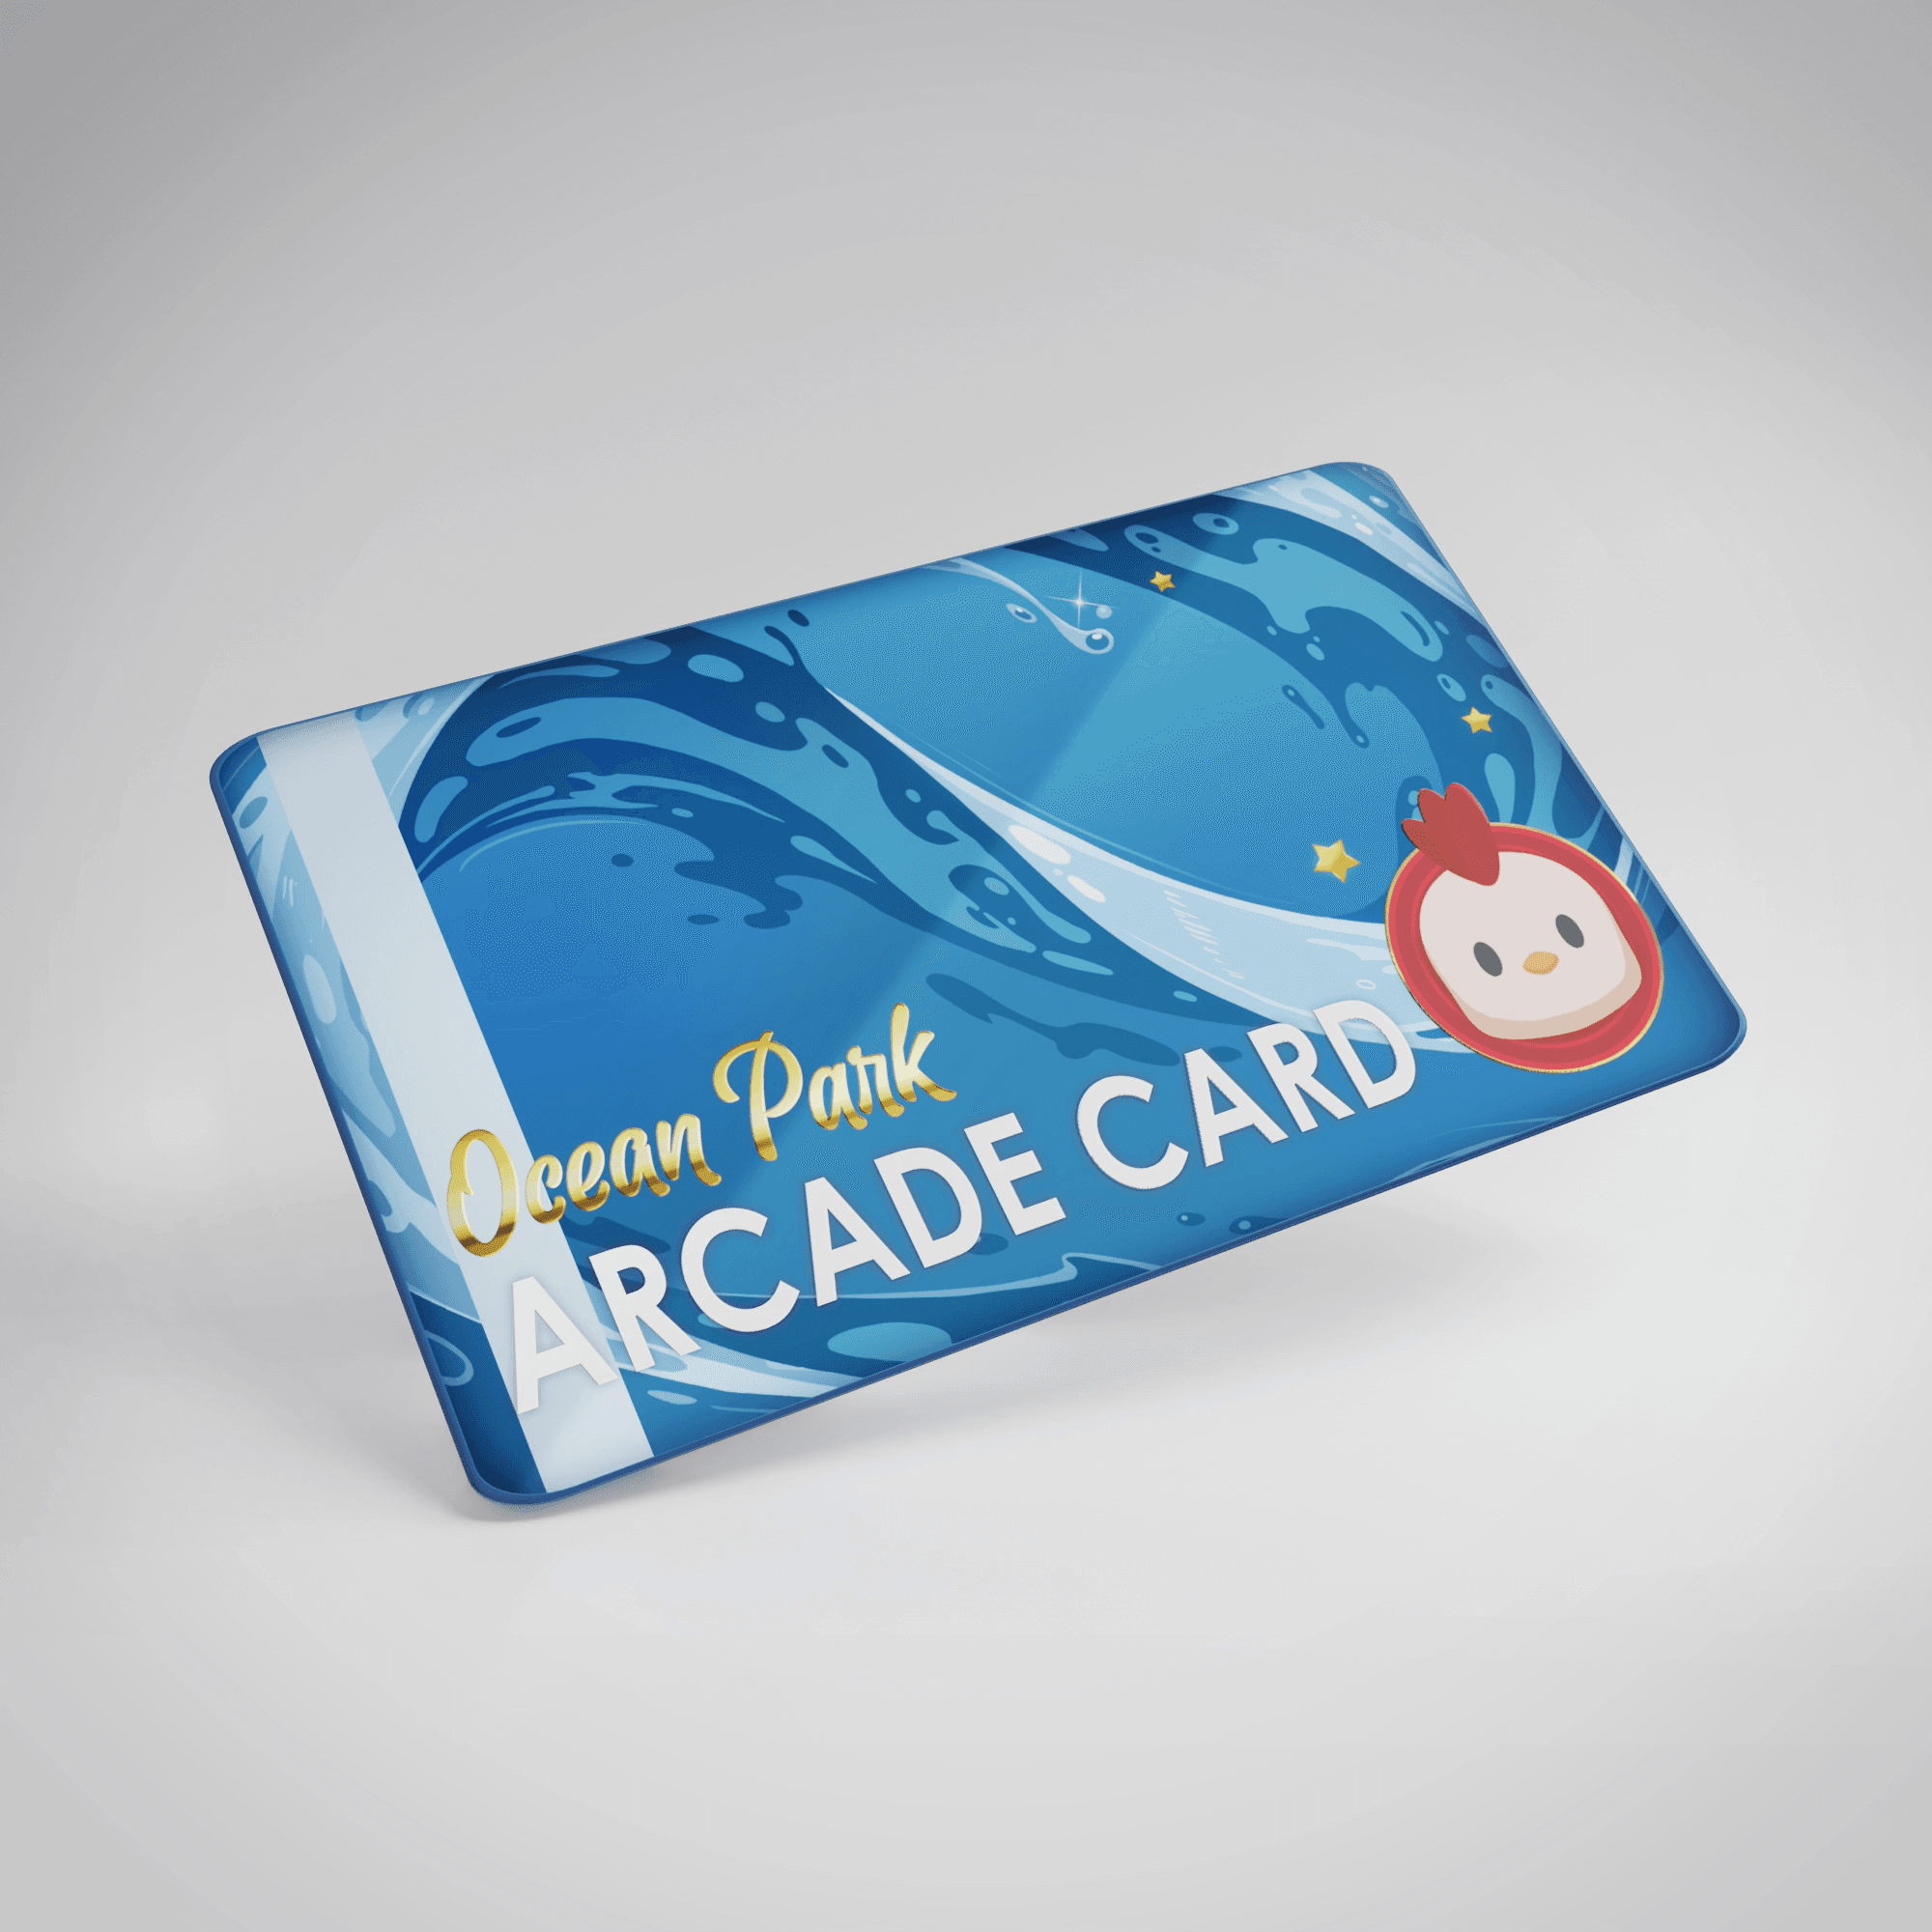 Standard Arcade Card #7/200